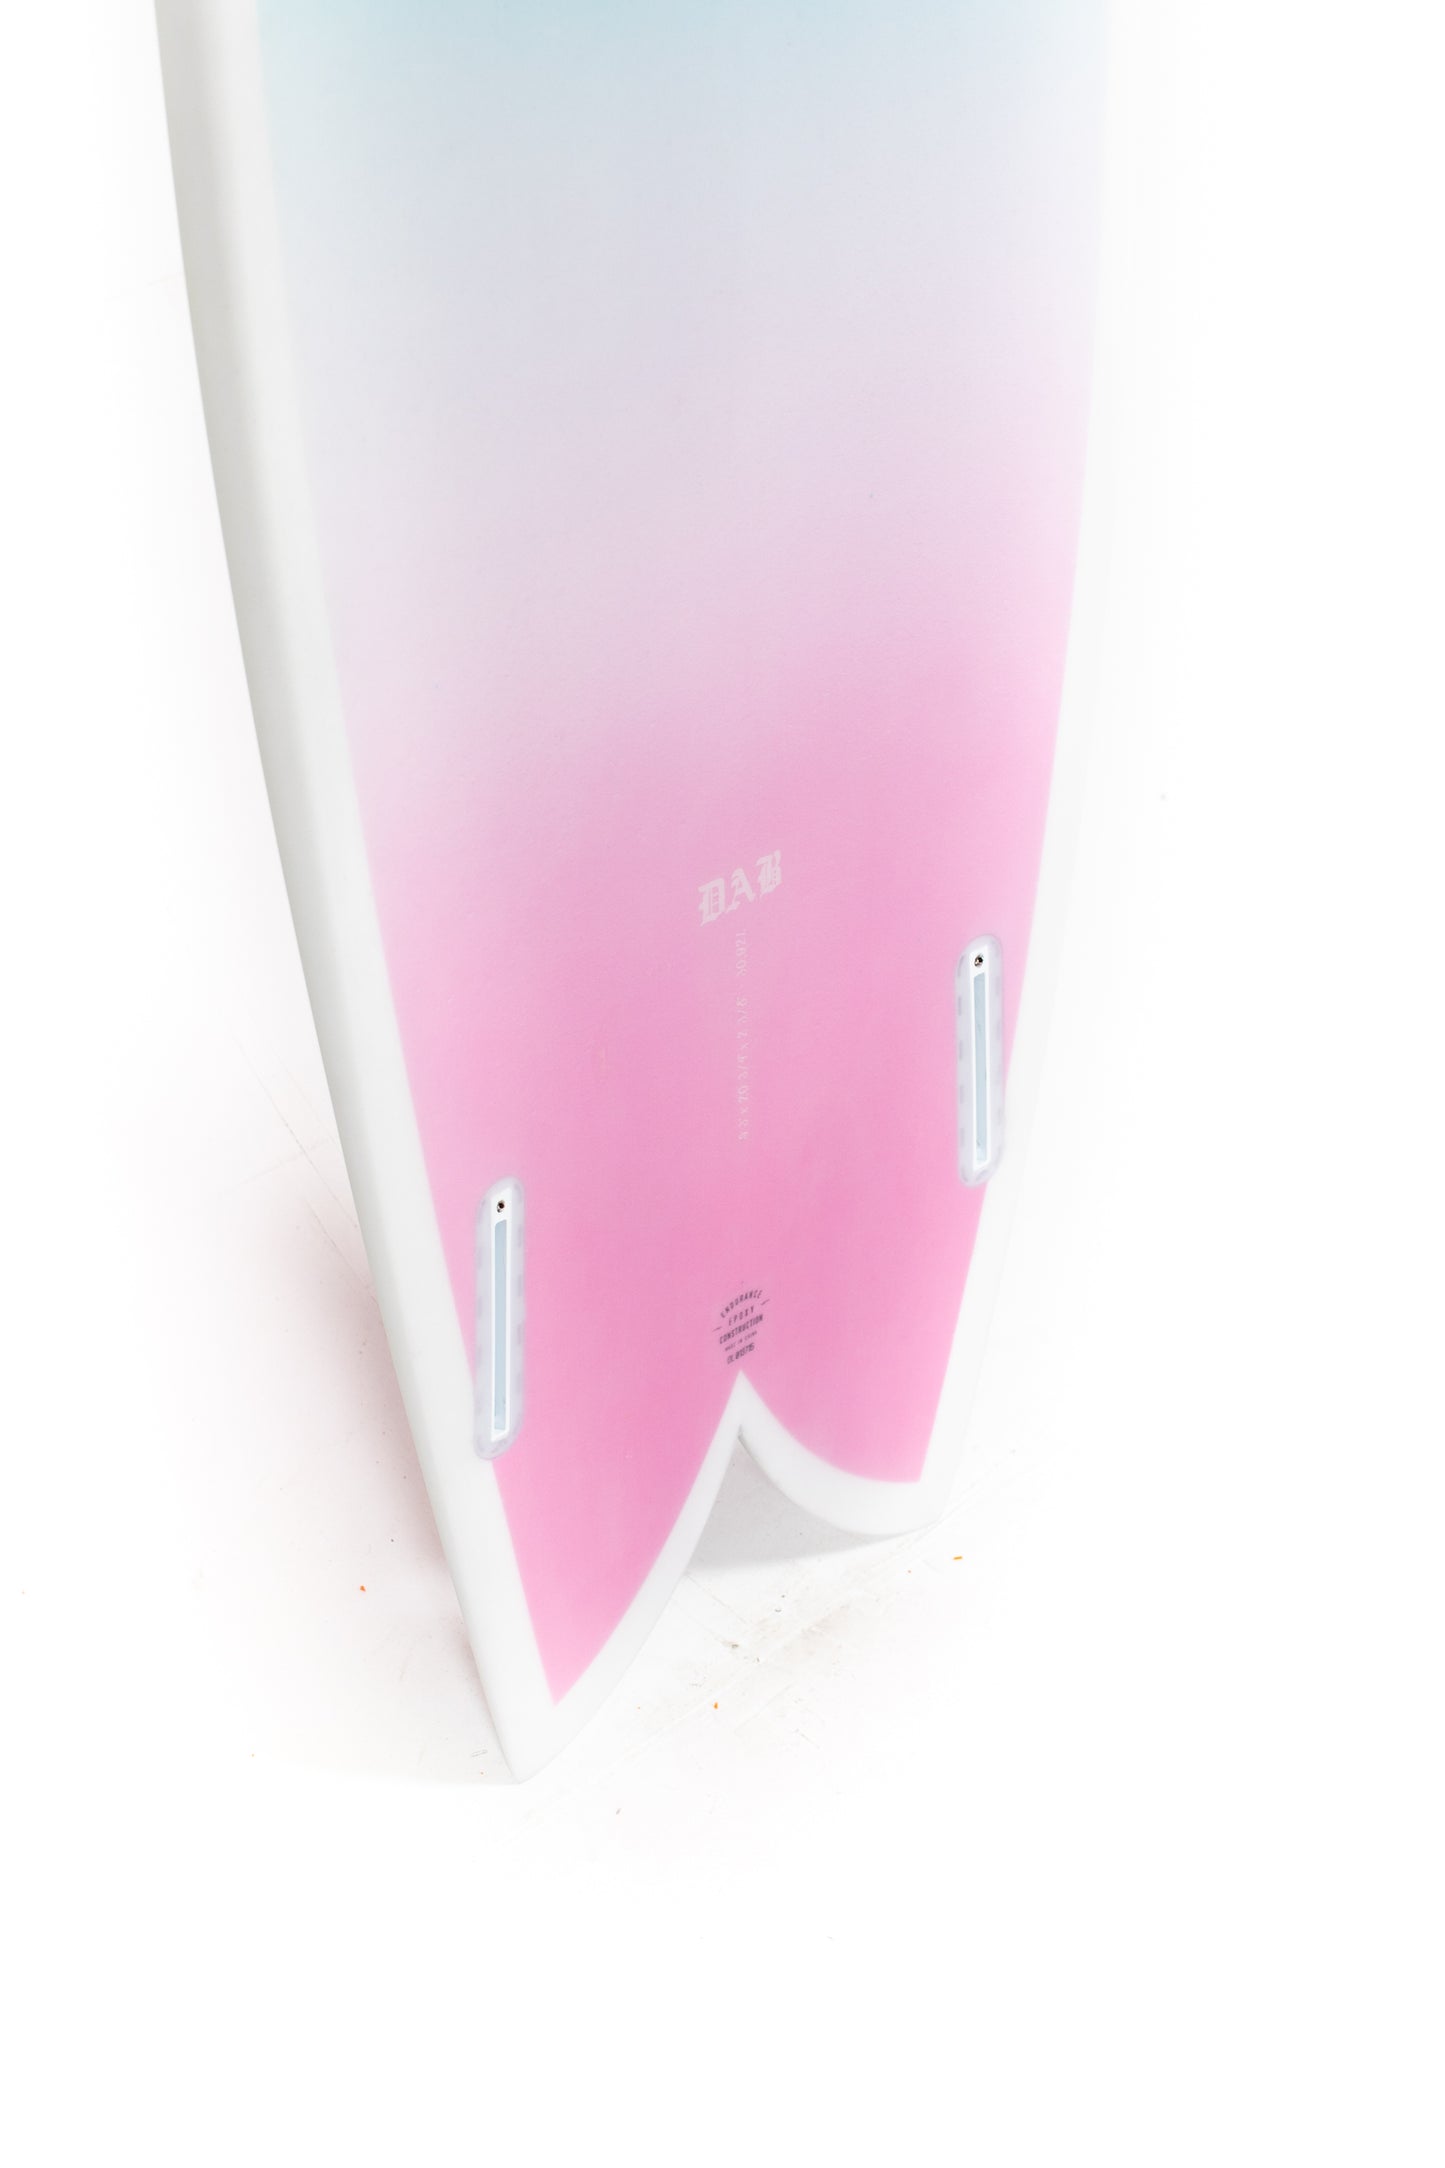 
                  
                    Pukas Surf Shop -  Indio Surfboard - DAB Space 2 - 5’5" x 20 7/8 x 2 7/16 x 33.50L
                  
                